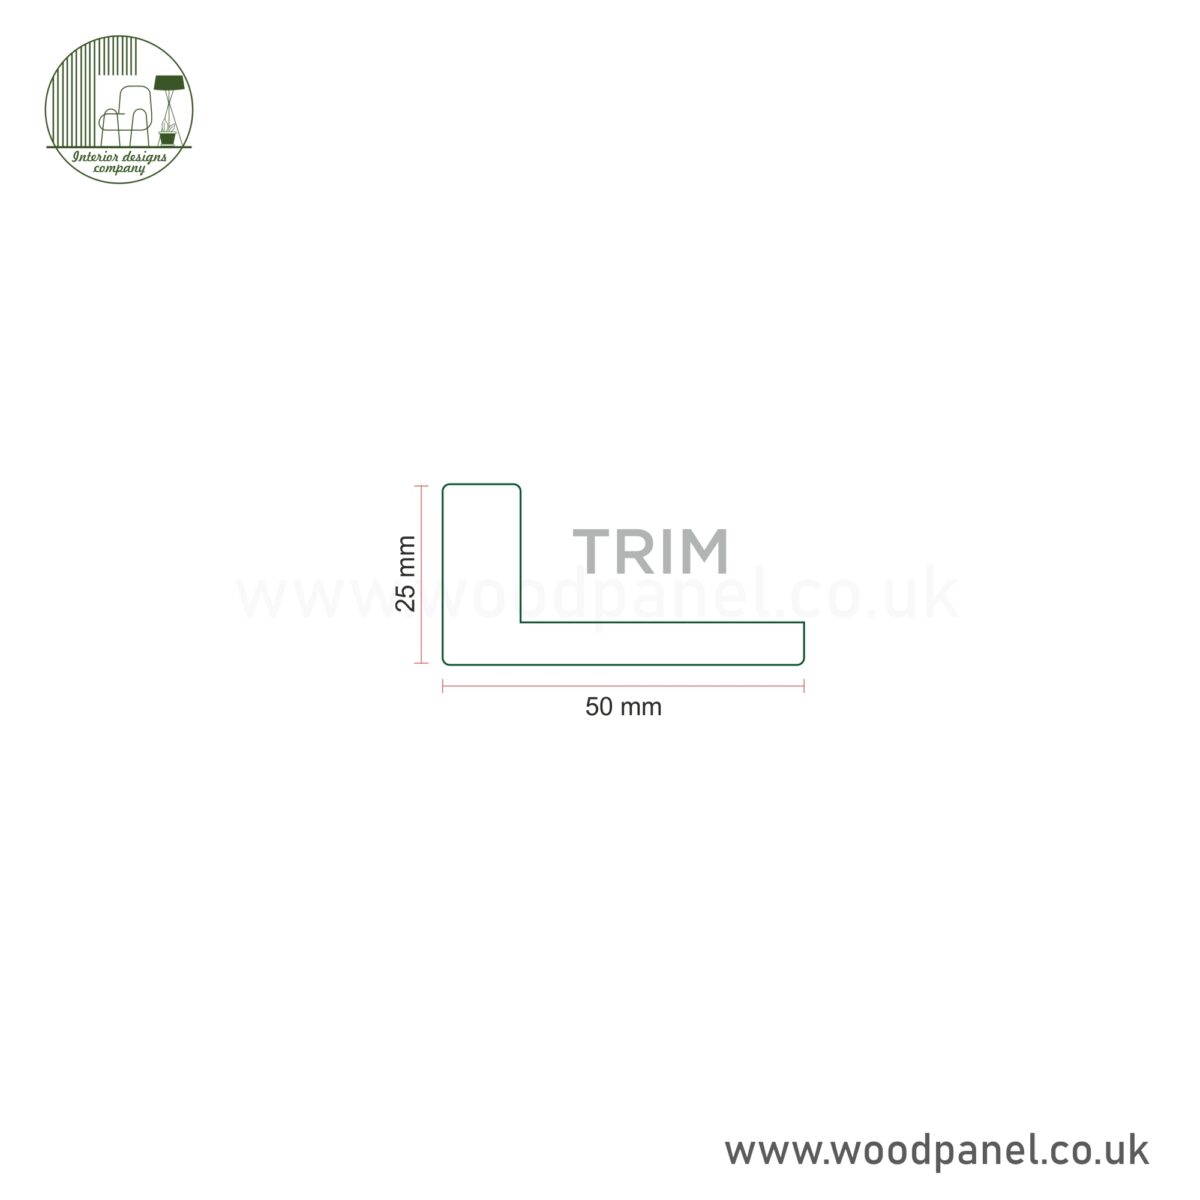 Trim 1 Magnum Opus Wood panel COLLECTION PANEL C1830 TEXTURED SLATE GRAY TOP/BOTTOM TRIM CAP ST125